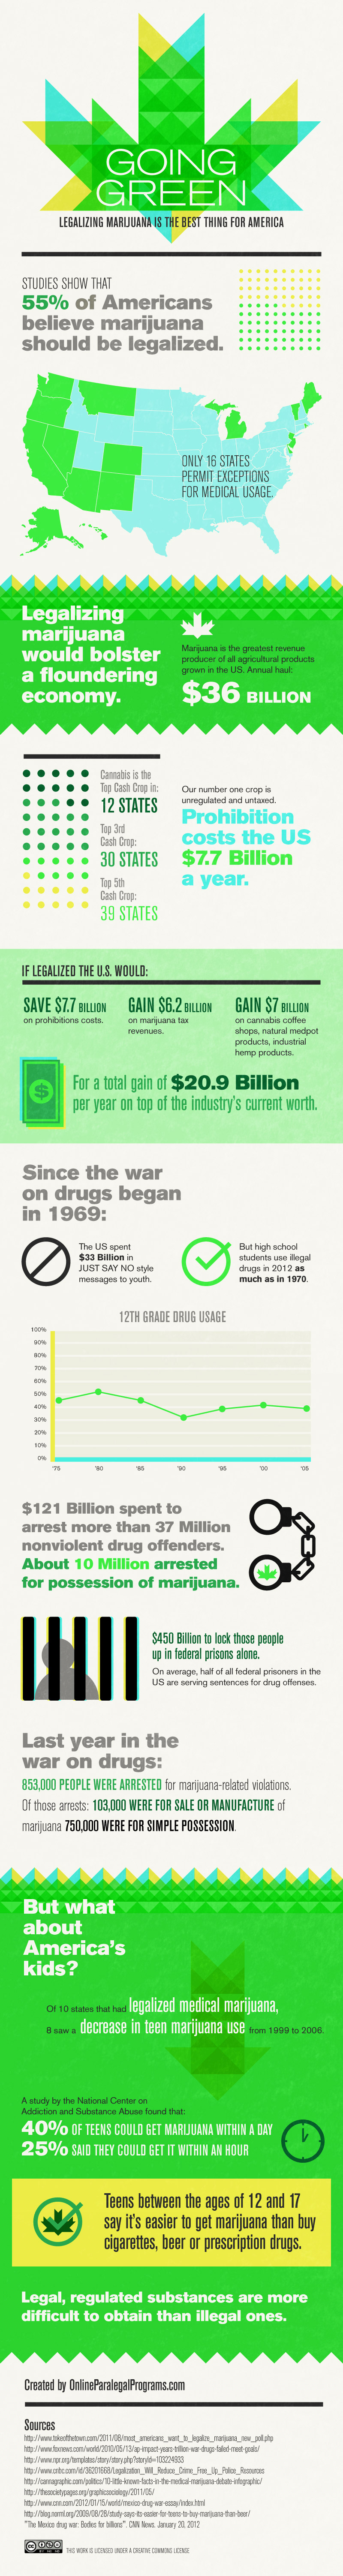 marijuanalegalization Legalize Marijuana? Benefits Ignored by Federal Government (Infographic)